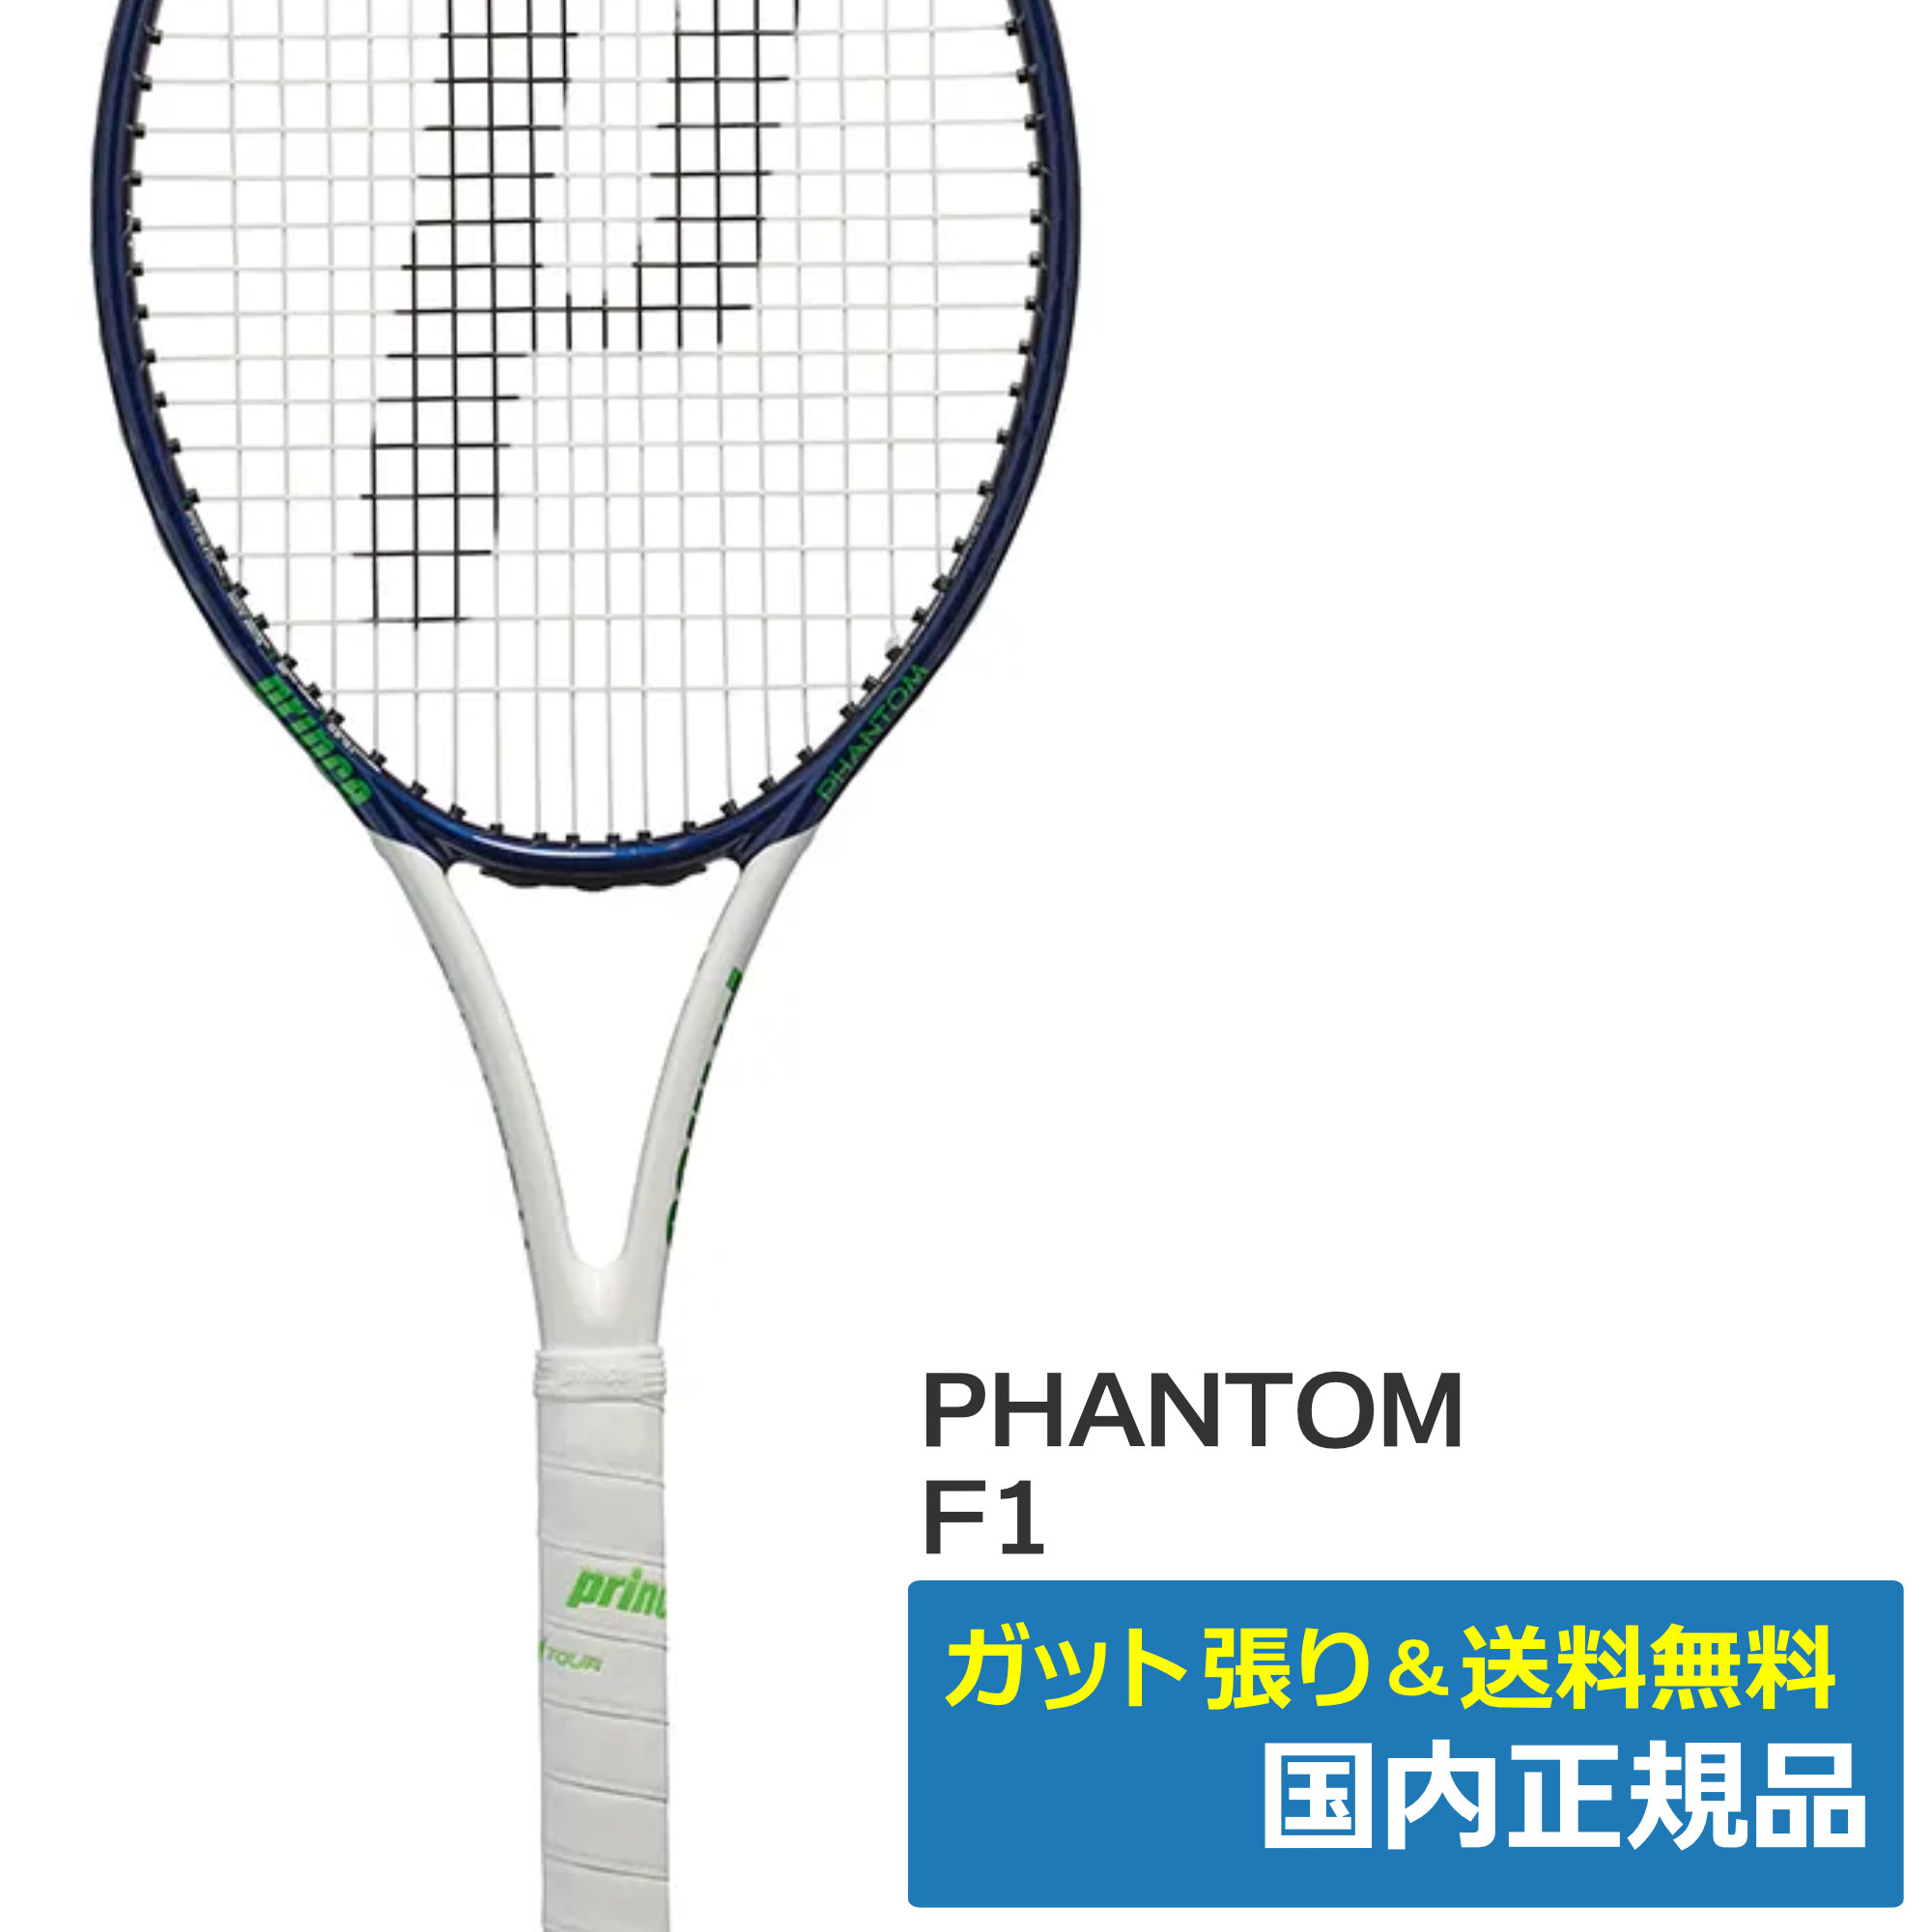 Prince PHANTOM F1 - ラケット(硬式用)